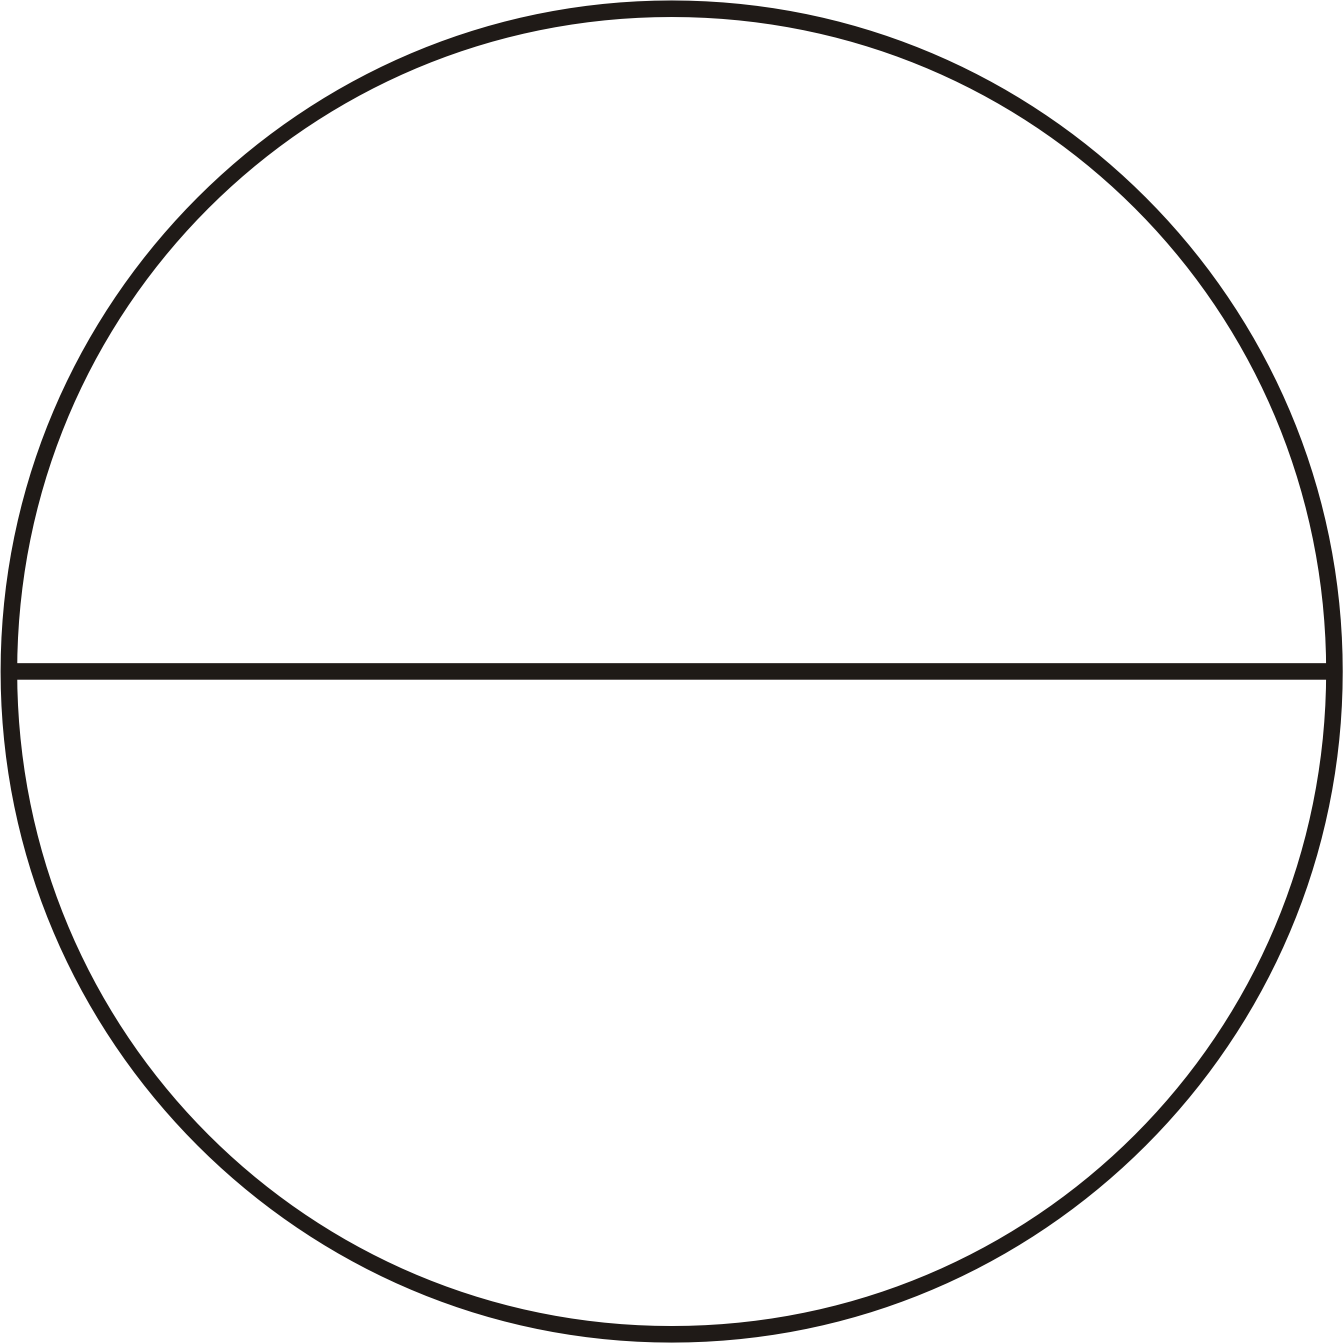 Круг плюс круг равно. Круг поделенный на 2 части. Круг поделенный на 4 части. Rhgeu gjltktysq YF 4 xfcnb. Круг разделенный на части.